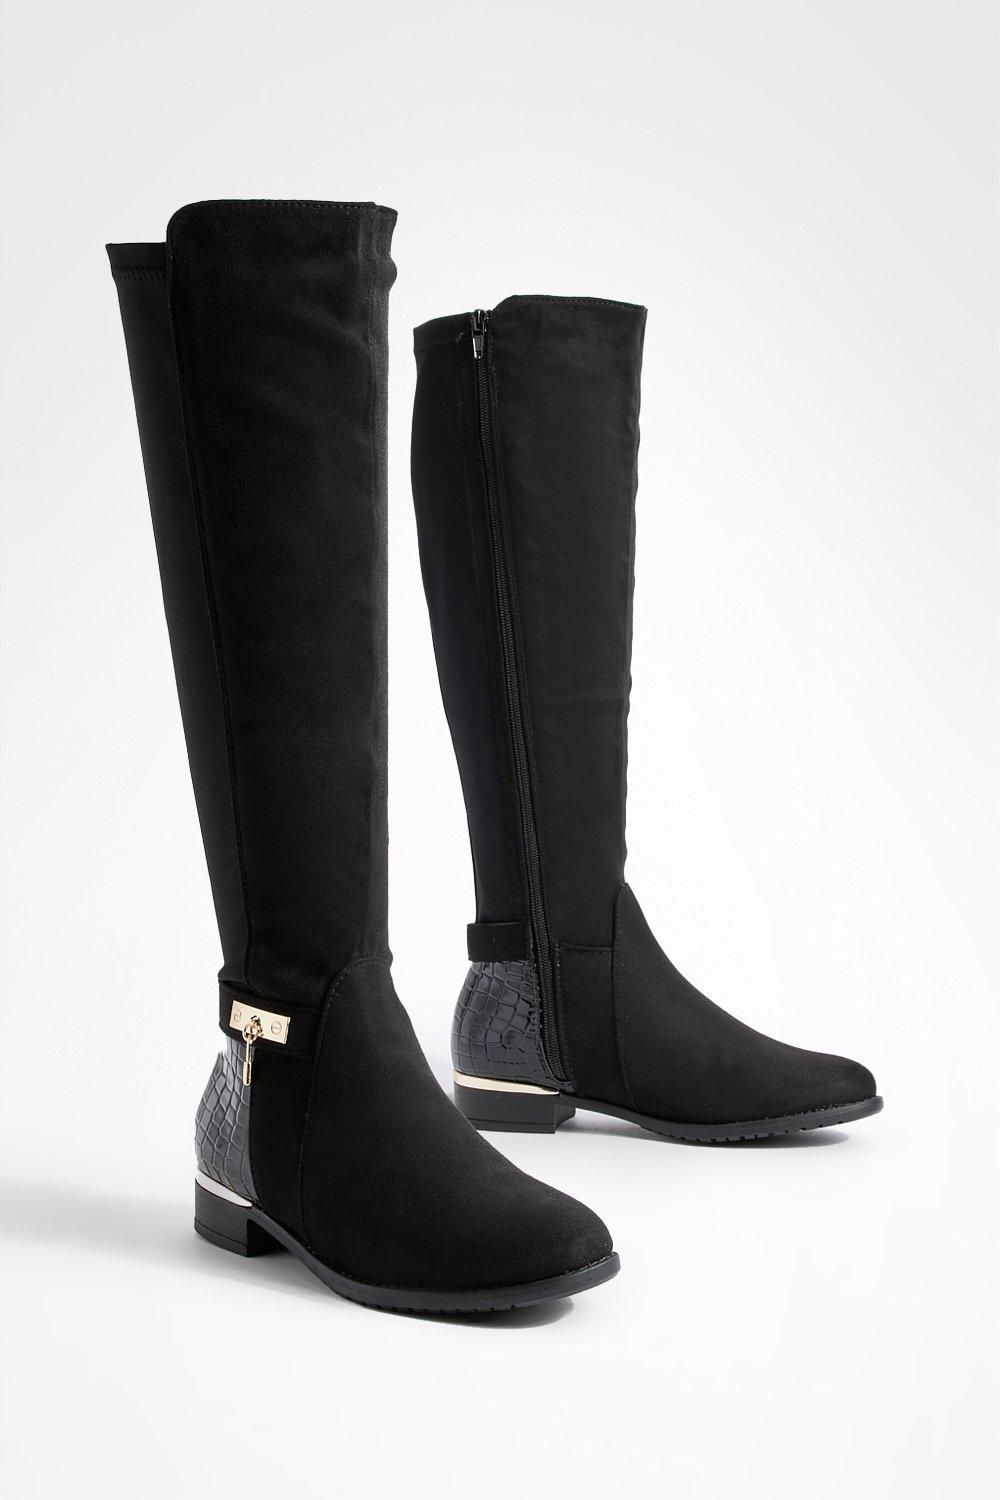 women's black knee high boots sale